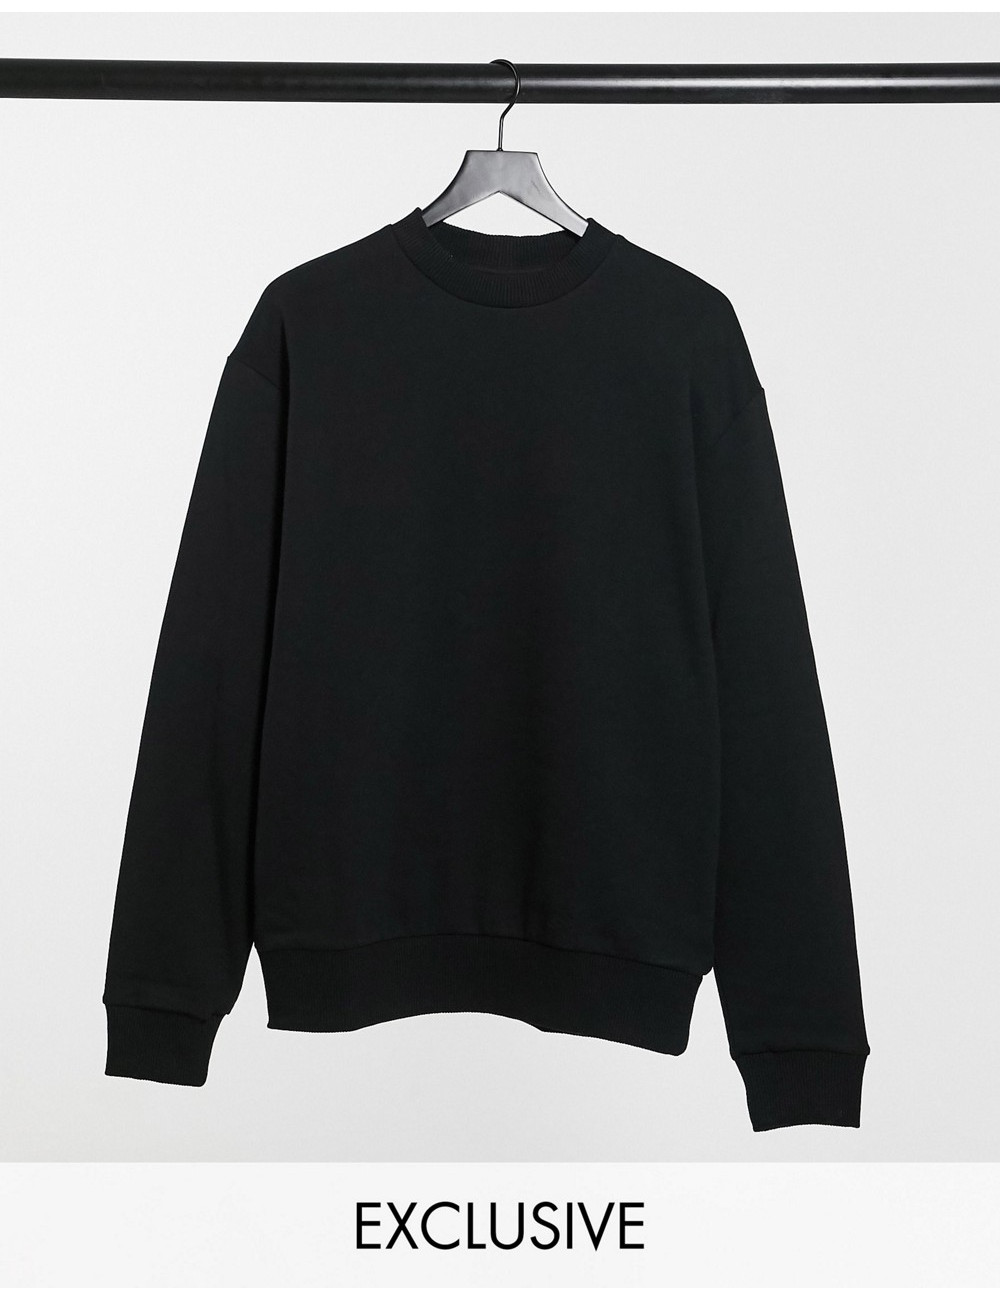 COLLUSION sweatshirt in black